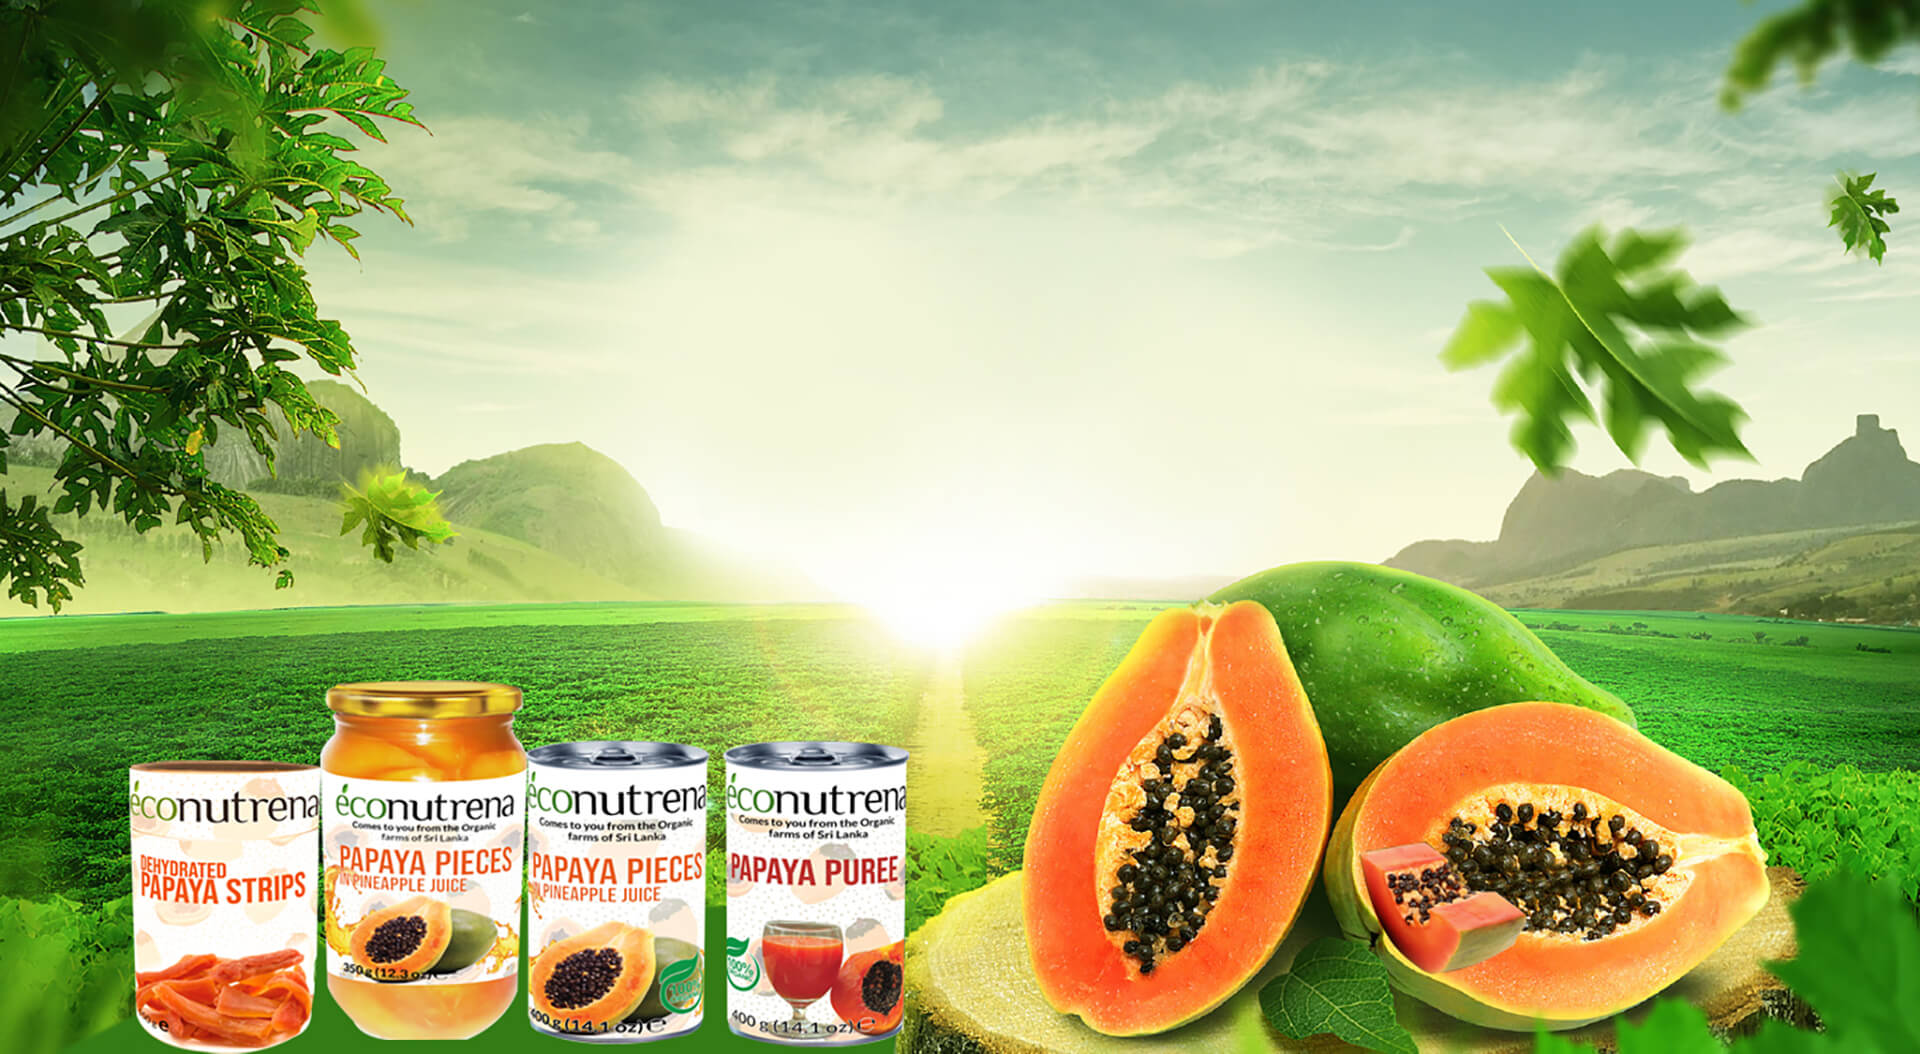 econutrena-fruit-product-category-papaya